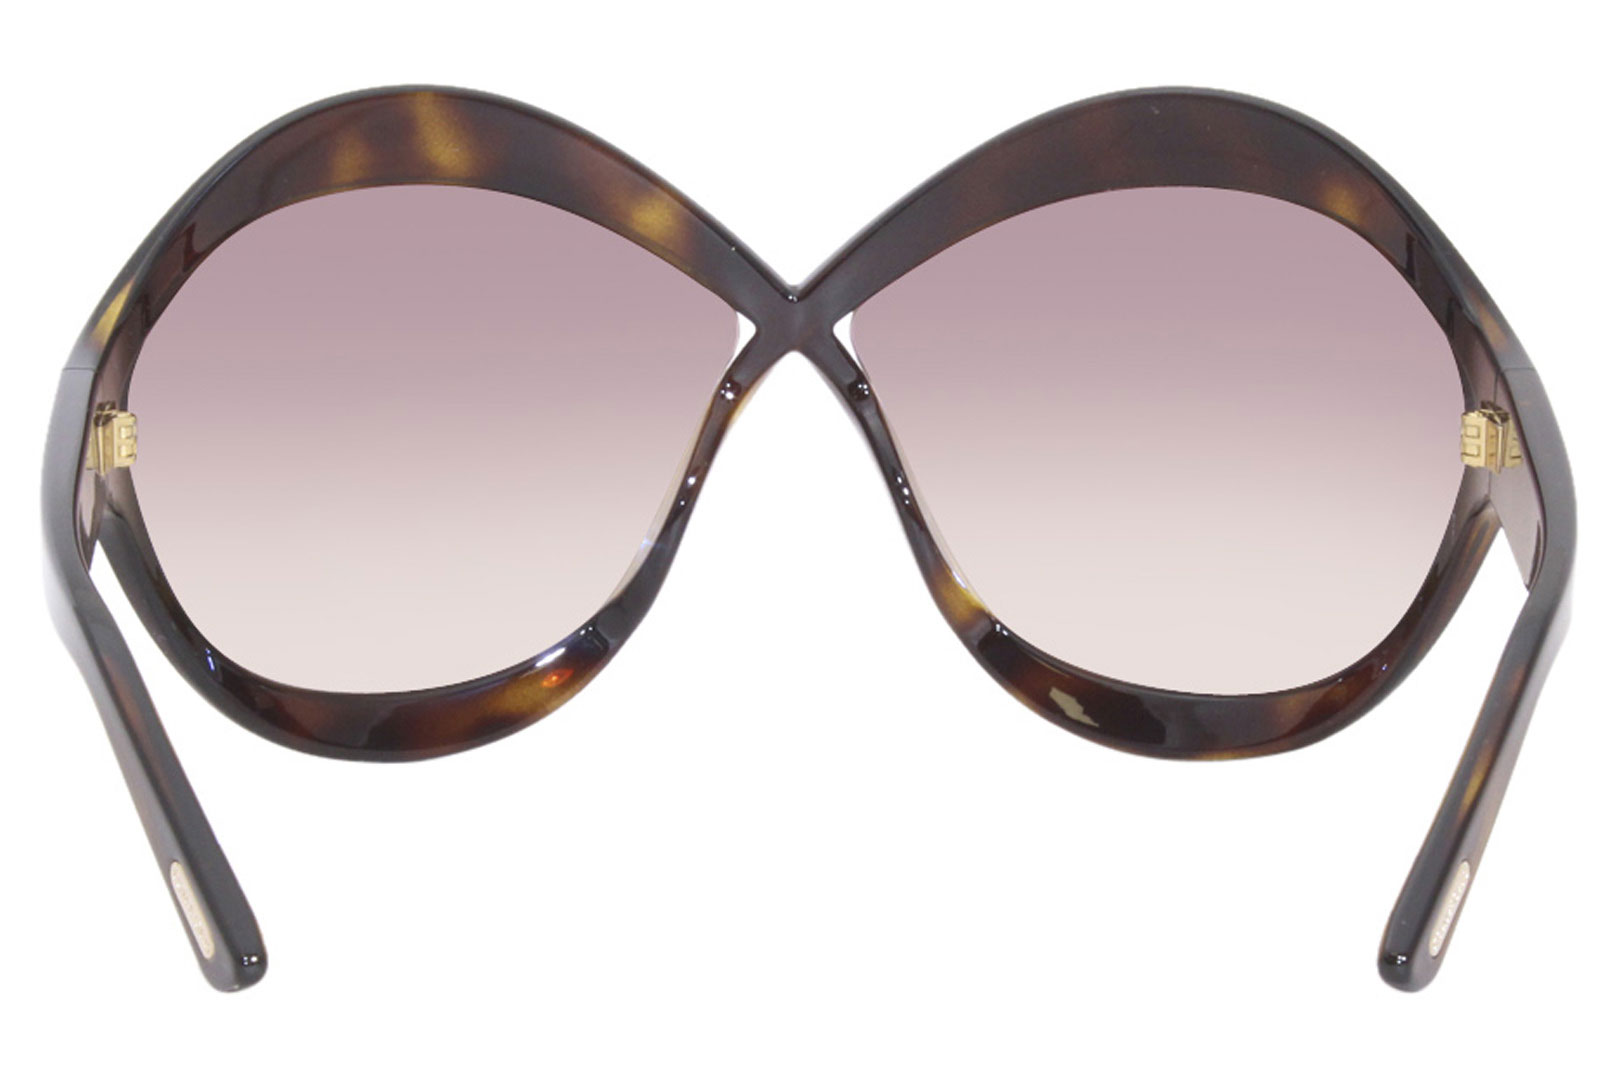 Tom Ford Sunglasses Women's Carine-02 TF902 01B Shiny Black/Smoke Gradient  71mm 